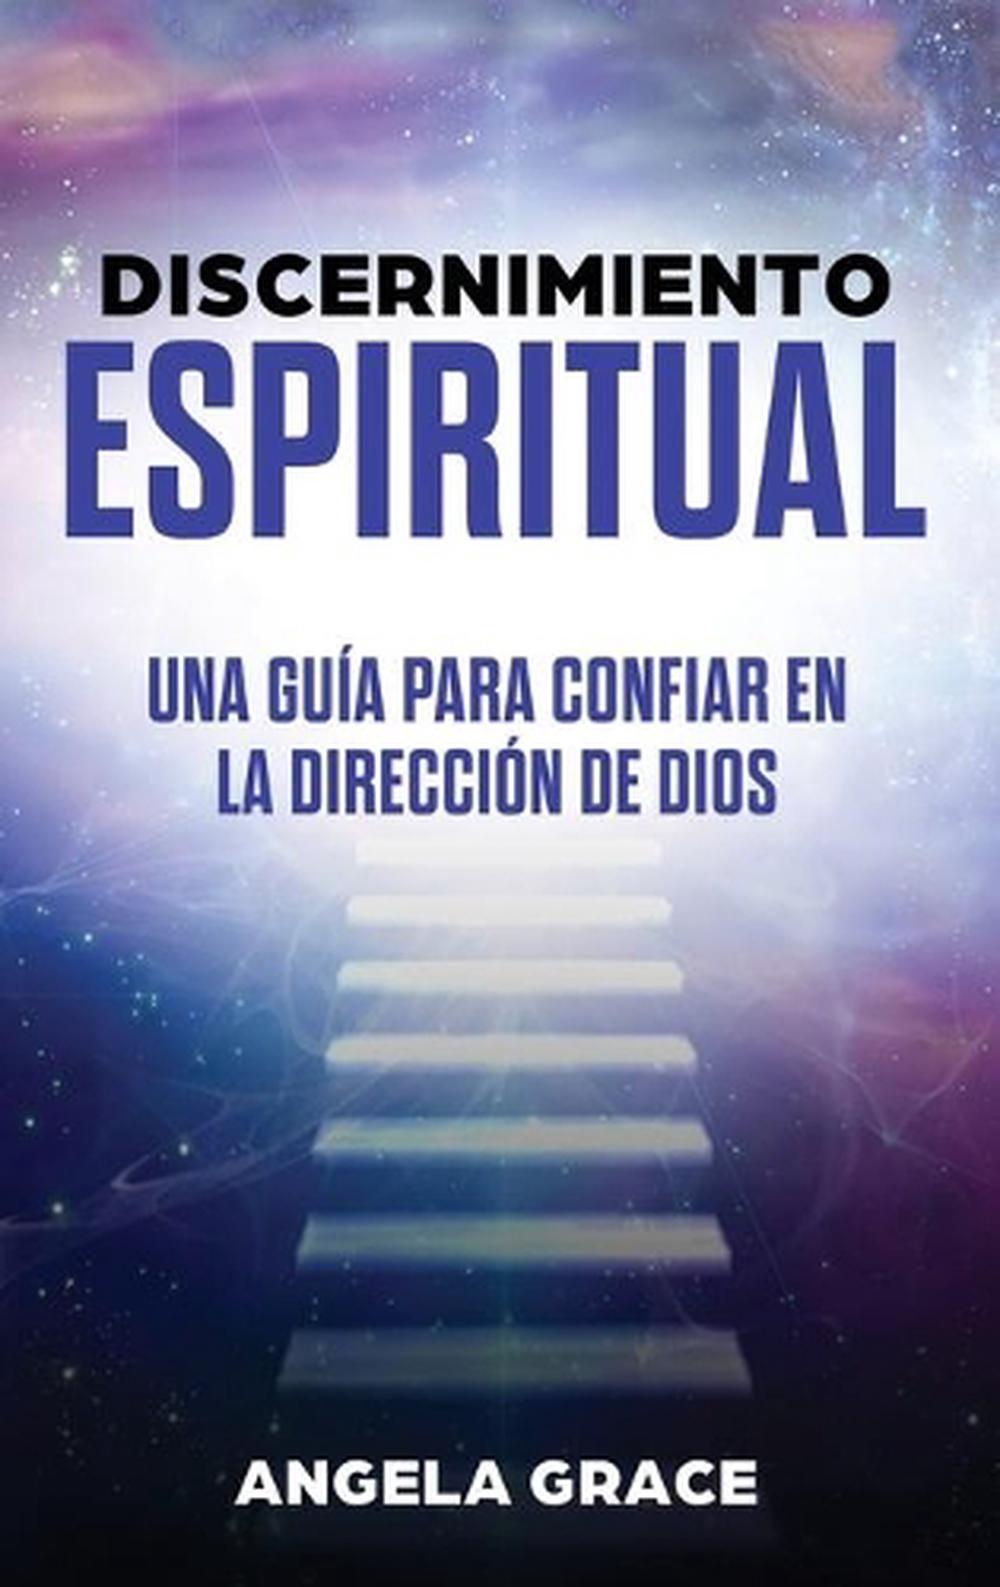 Discernimiento Espiritual by Angela Grace (English) Hardcover Book Free ...